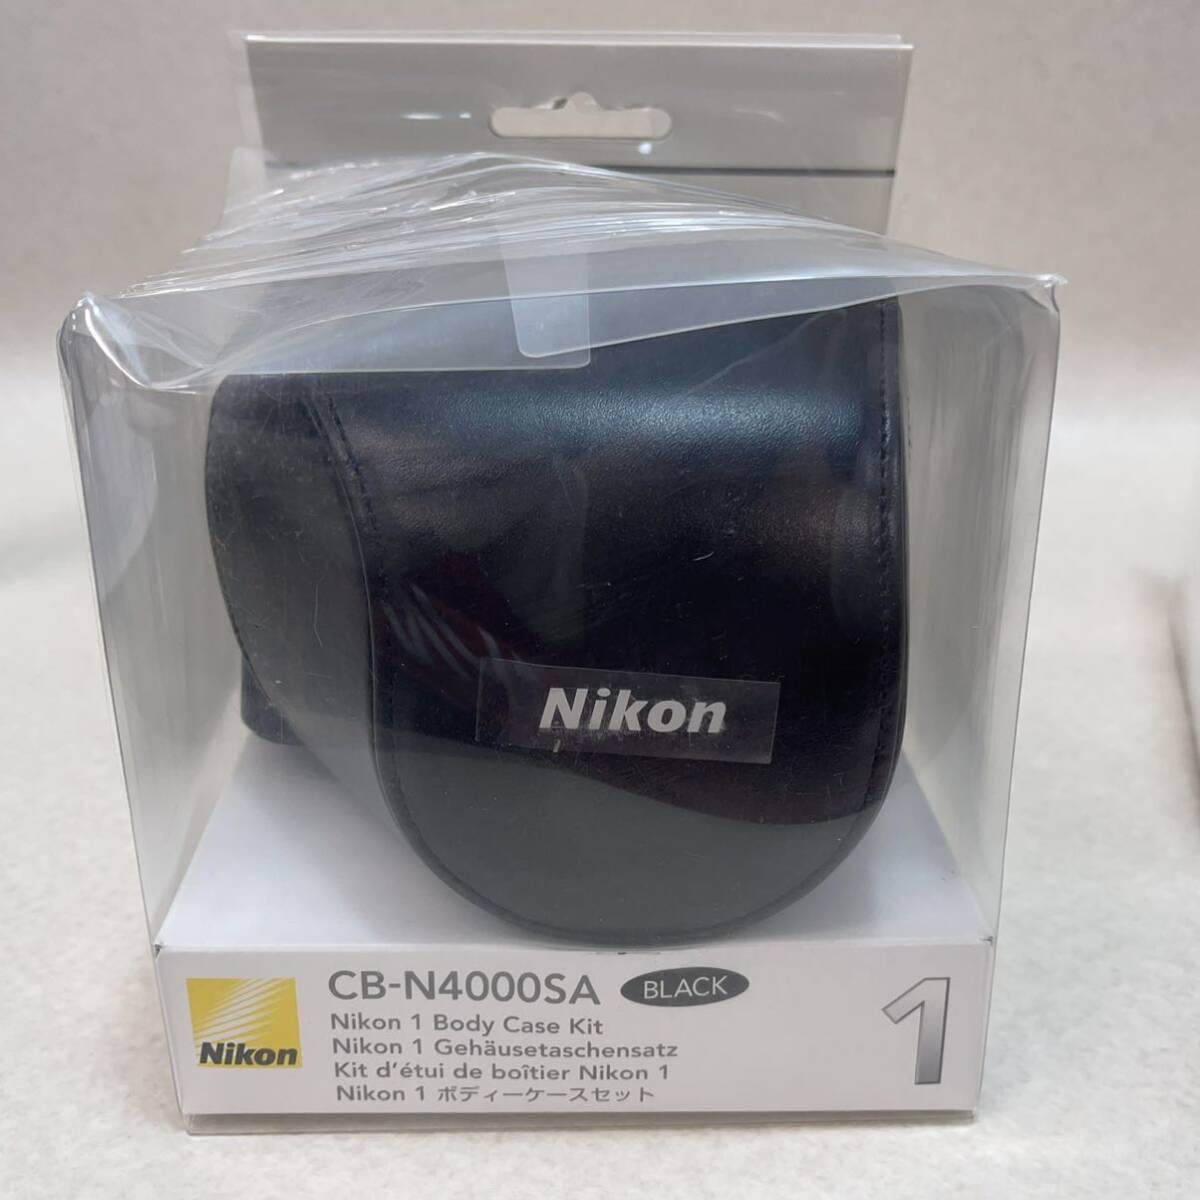 K2035* б/у не использовался товар * Nikon Nikon мягкий чехол CS-NH23A черный, корпус кейс комплект CB-N4000SA черный 2 шт. комплект 